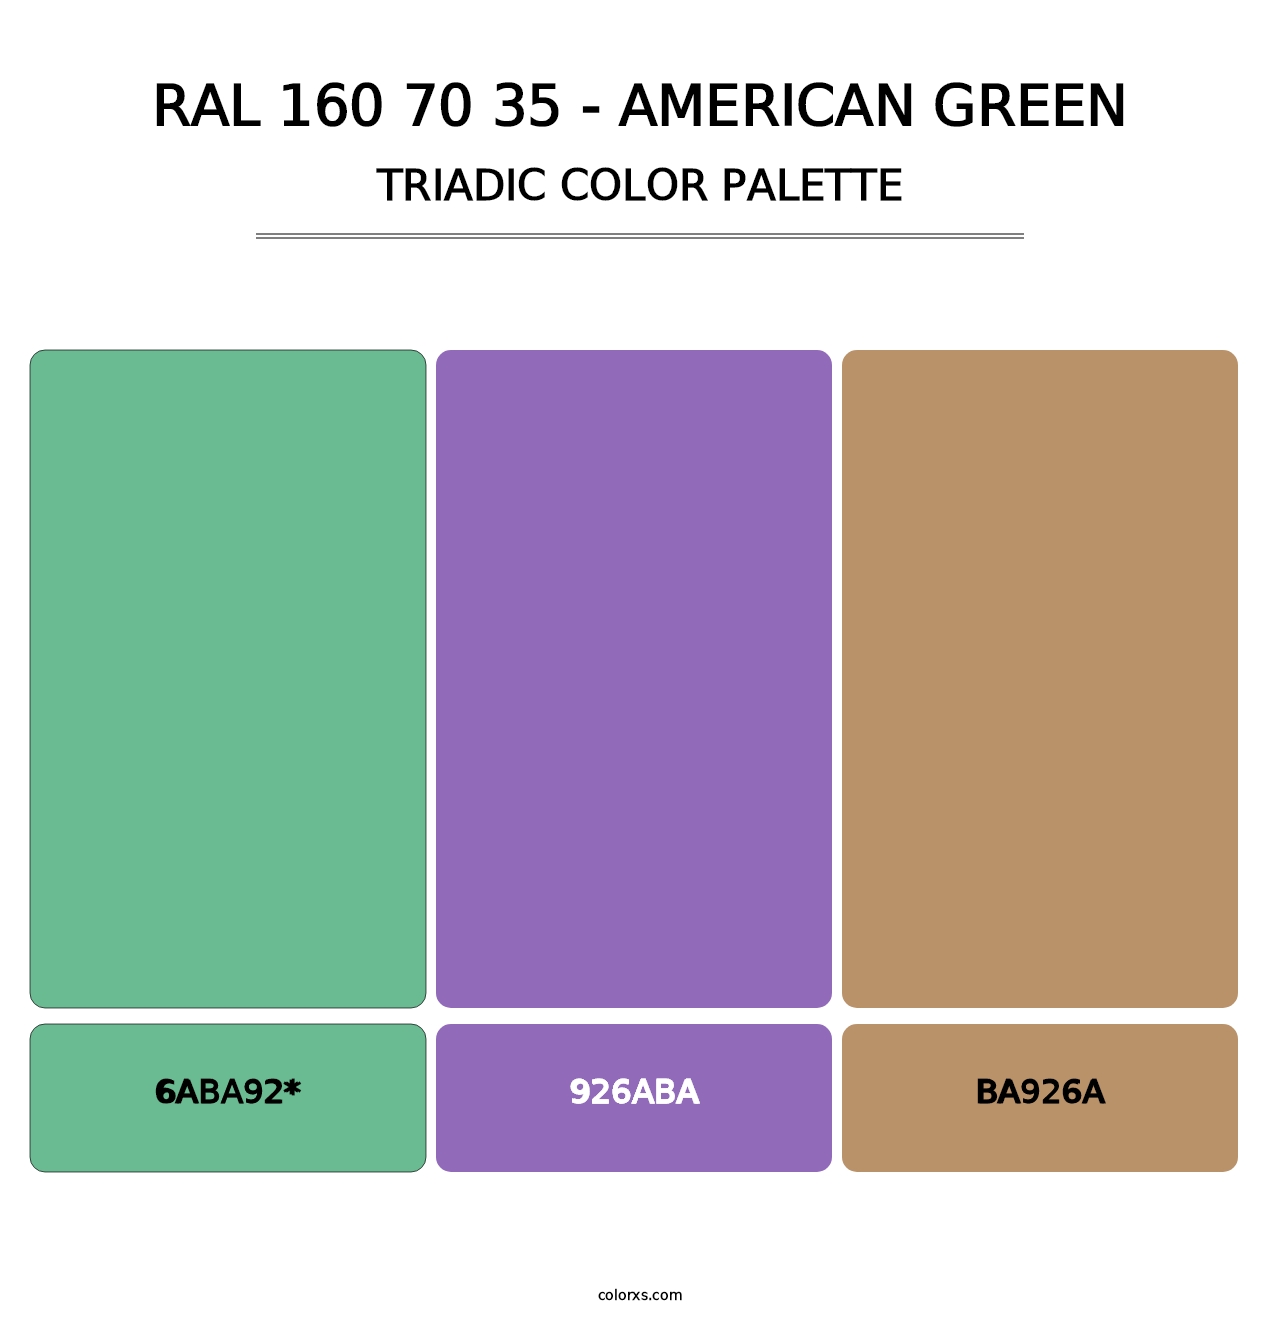 RAL 160 70 35 - American Green - Triadic Color Palette